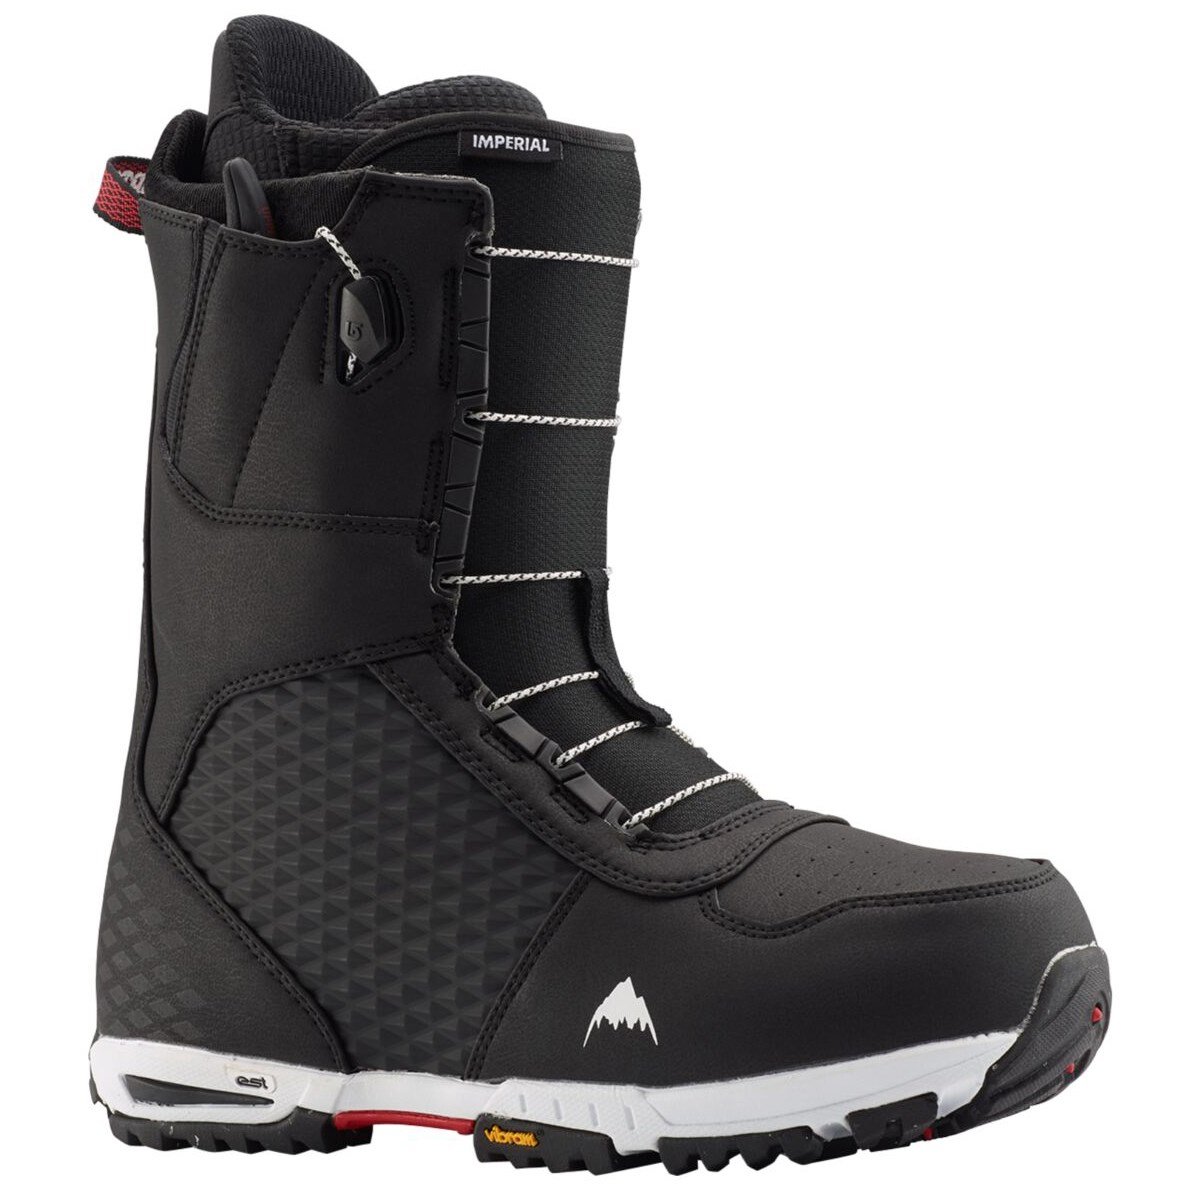 Burton Imperial Ltd Snowboard Boots 2020 | evo Canada